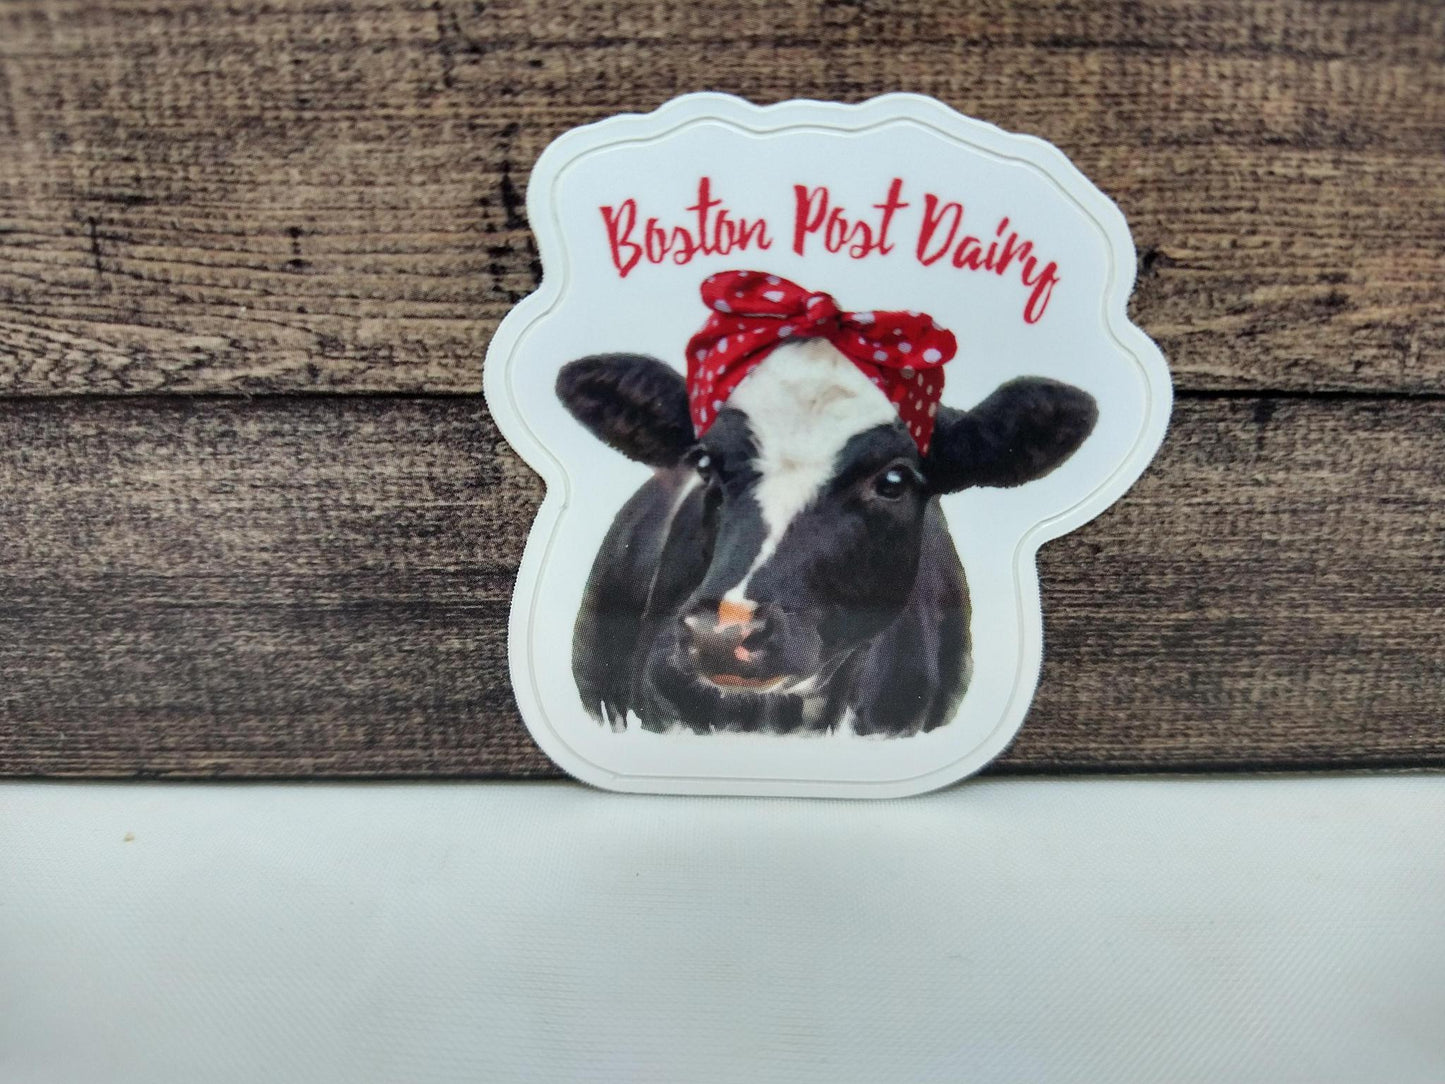 Boston Post Dairy Stickers, Small 1.75-2"